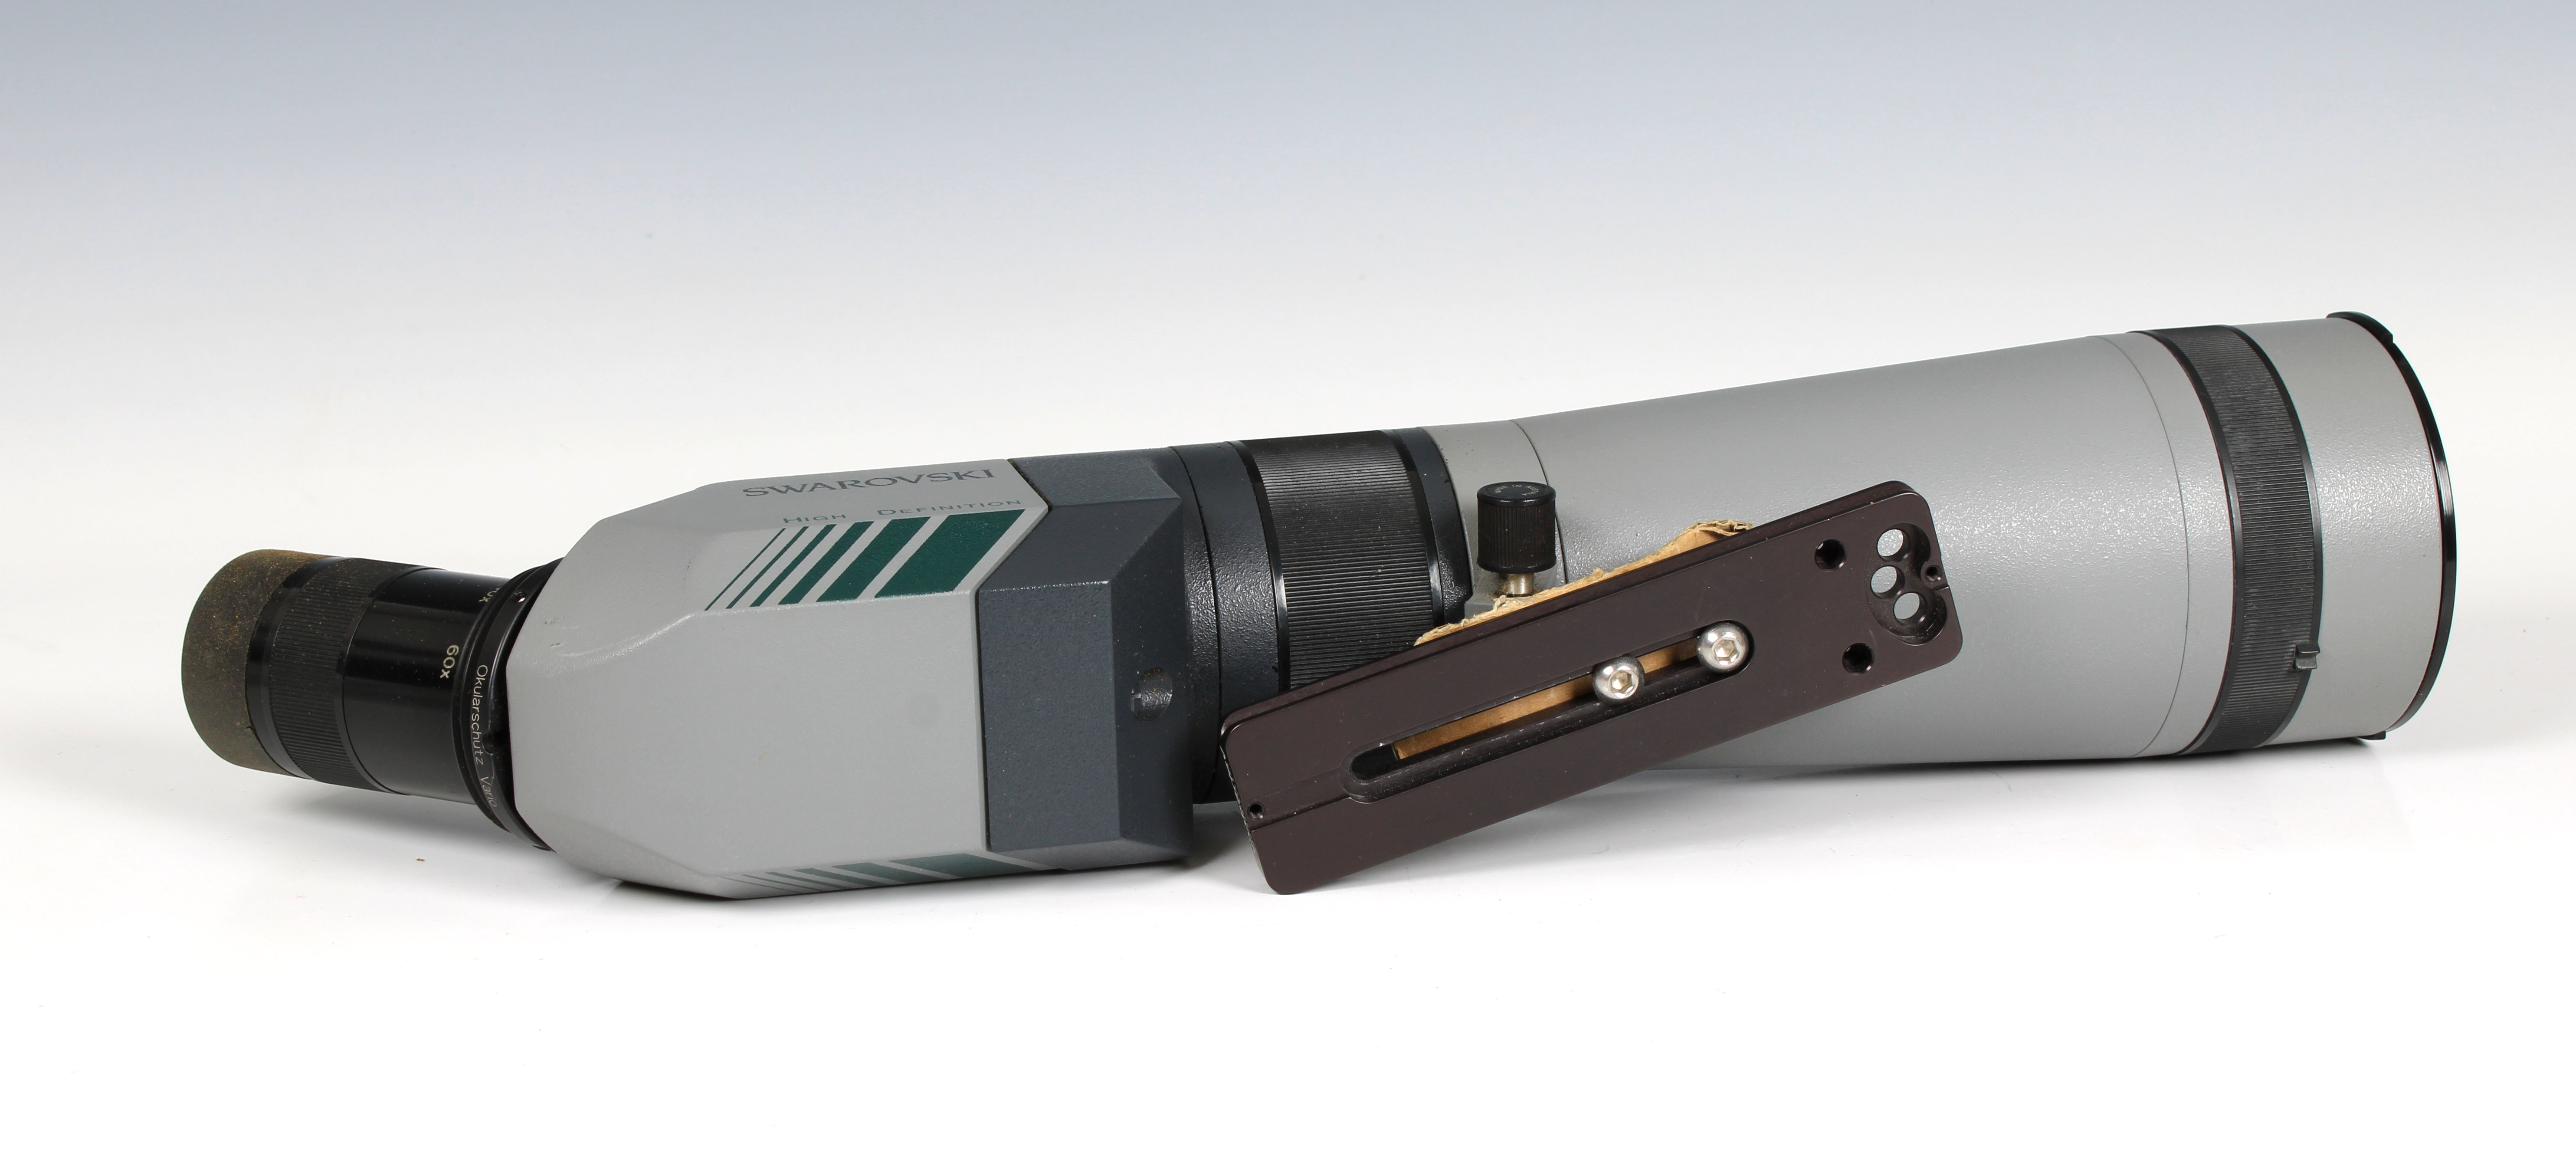 A Swarovski Habicht AT80 HD spotting scope. - Image 3 of 5